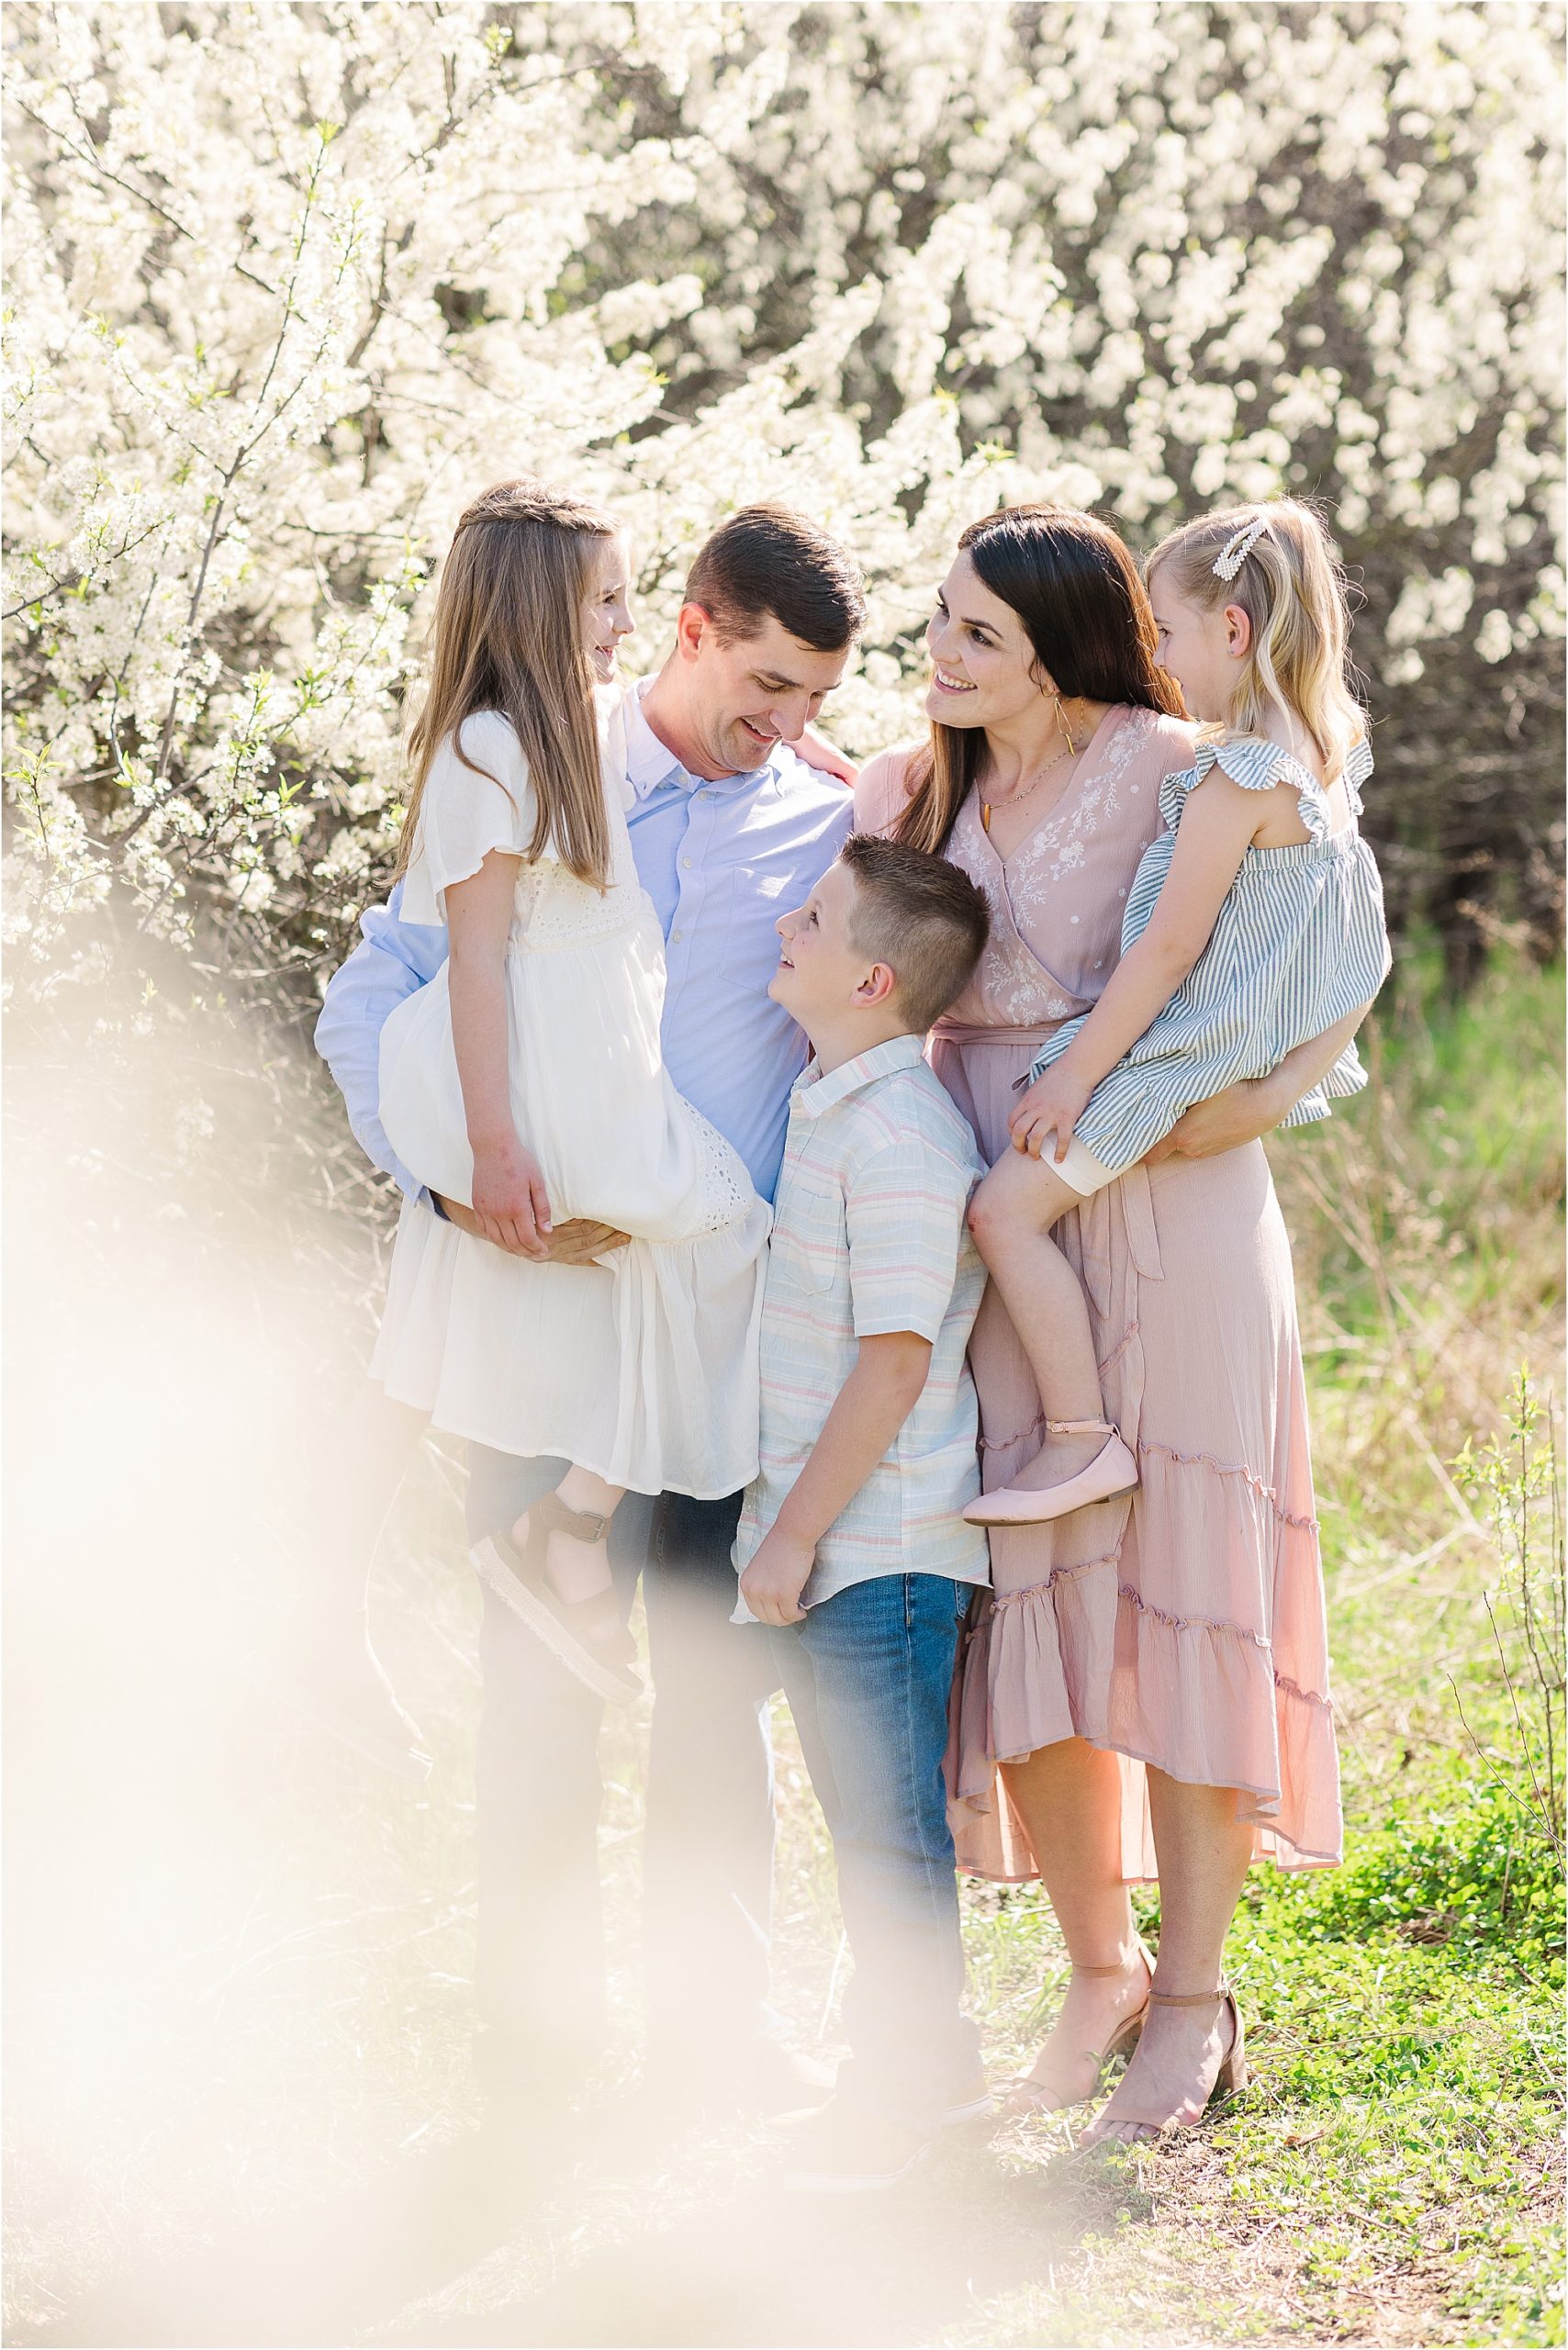 Harrington Family | Spring family photos 2021 mini sessions | Kelsey Alumbaugh Photography | #kcfamilyphotos #familyphotographer #springphotos #springfamilyphotos